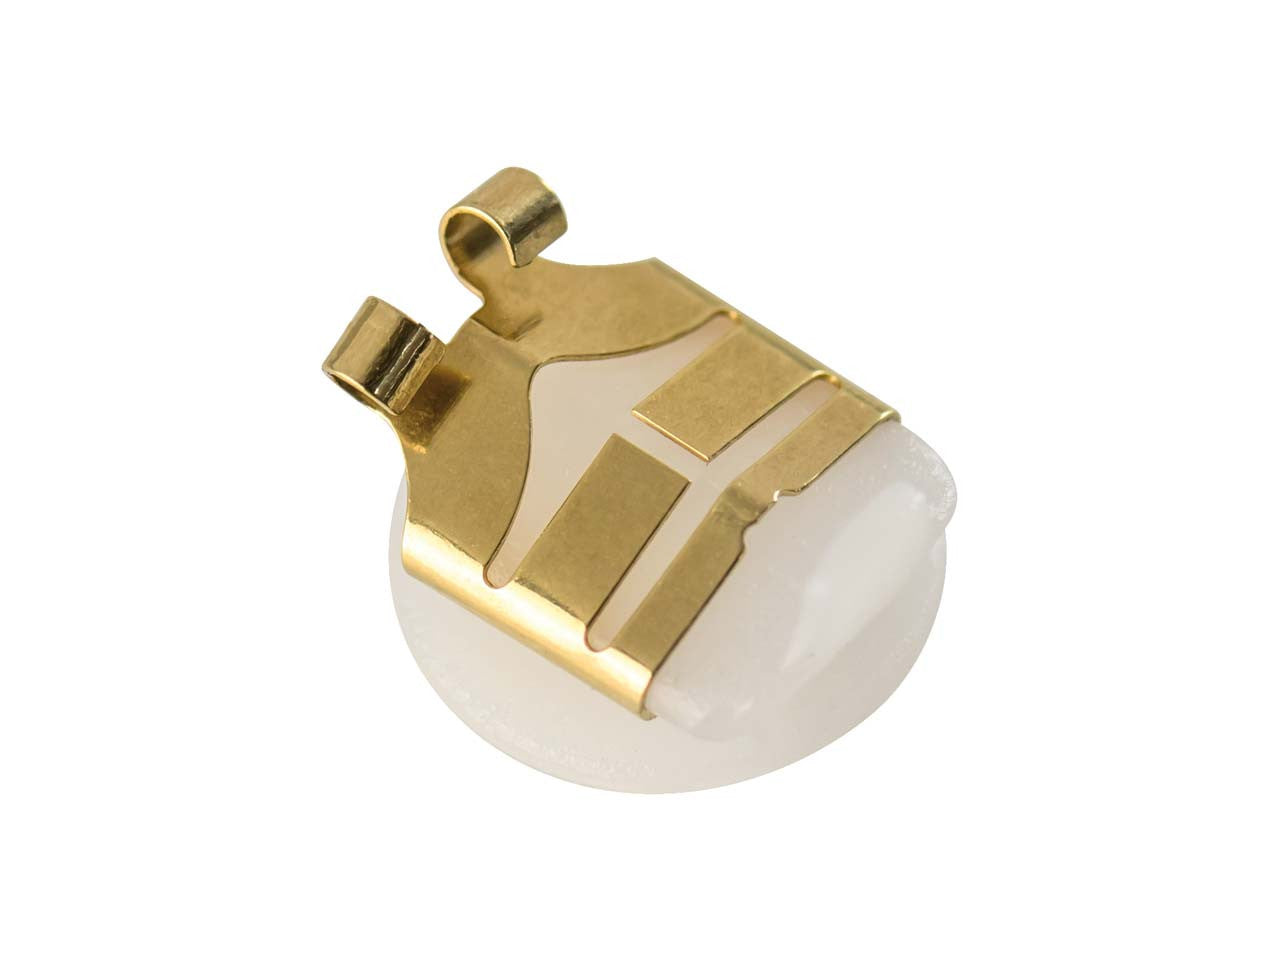 Lox Gold Lox Secure Earring Backs 2 Pair Pack | Ice Jewellery Australia